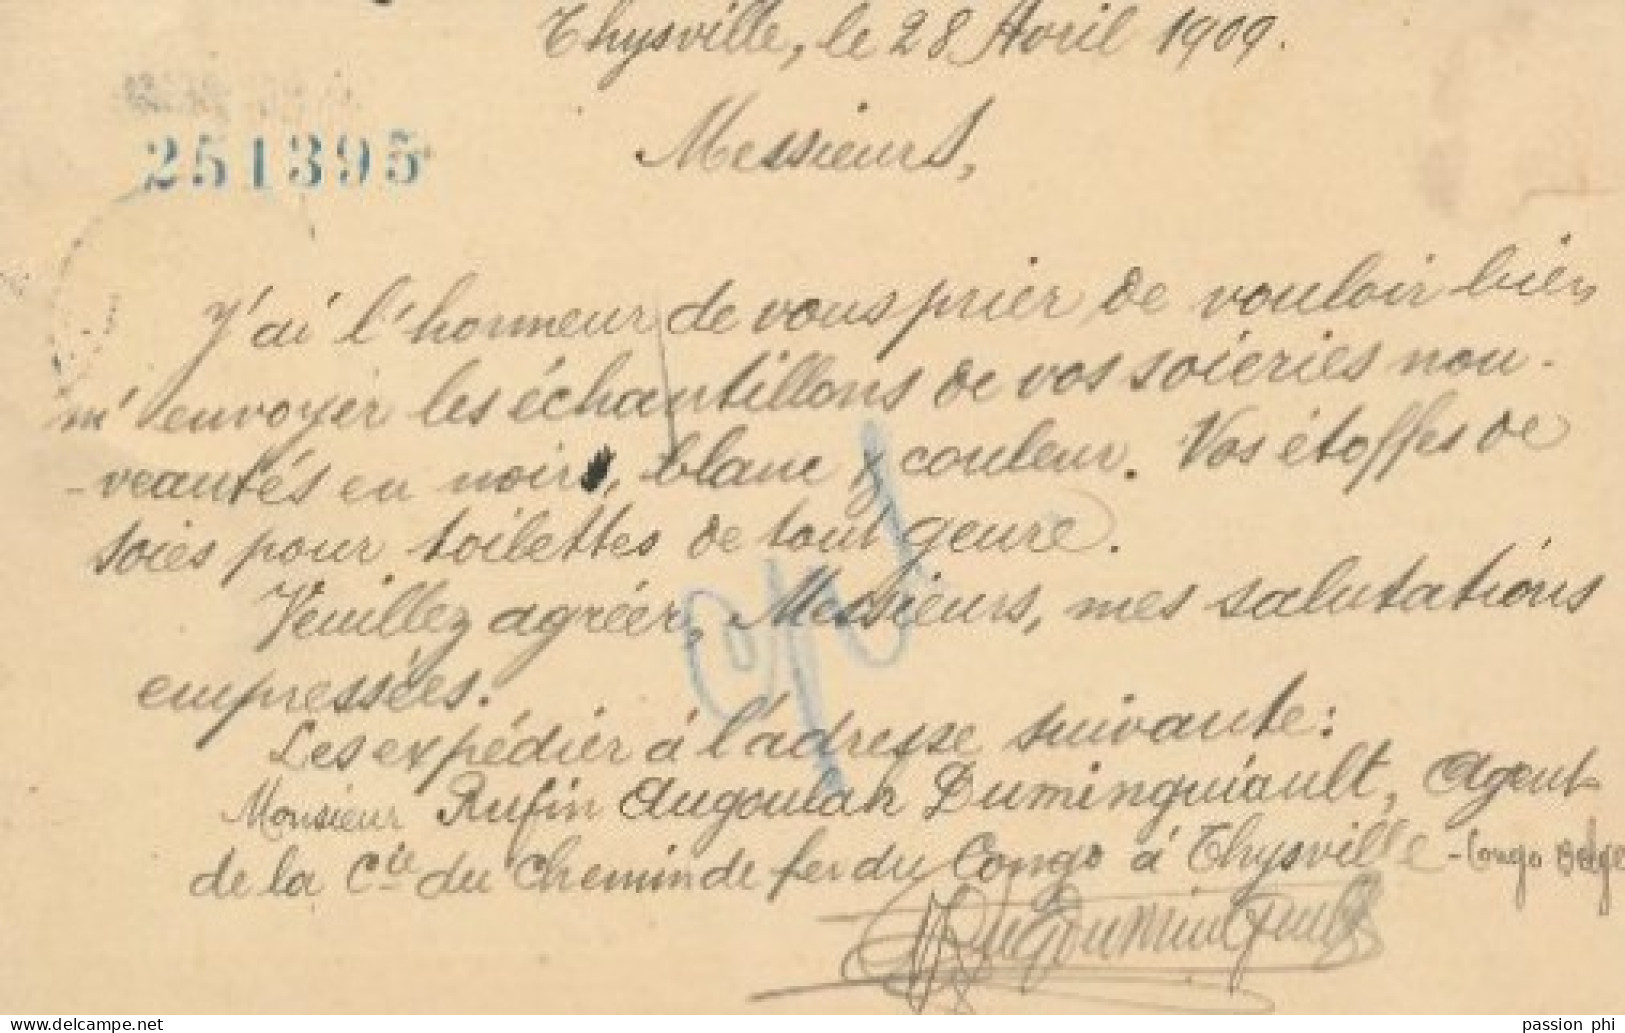 TT BELGIAN CONGO PS SBEP 21 L4 FROM MATADI 28.04.1909 TO SWITZERLAND - Stamped Stationery